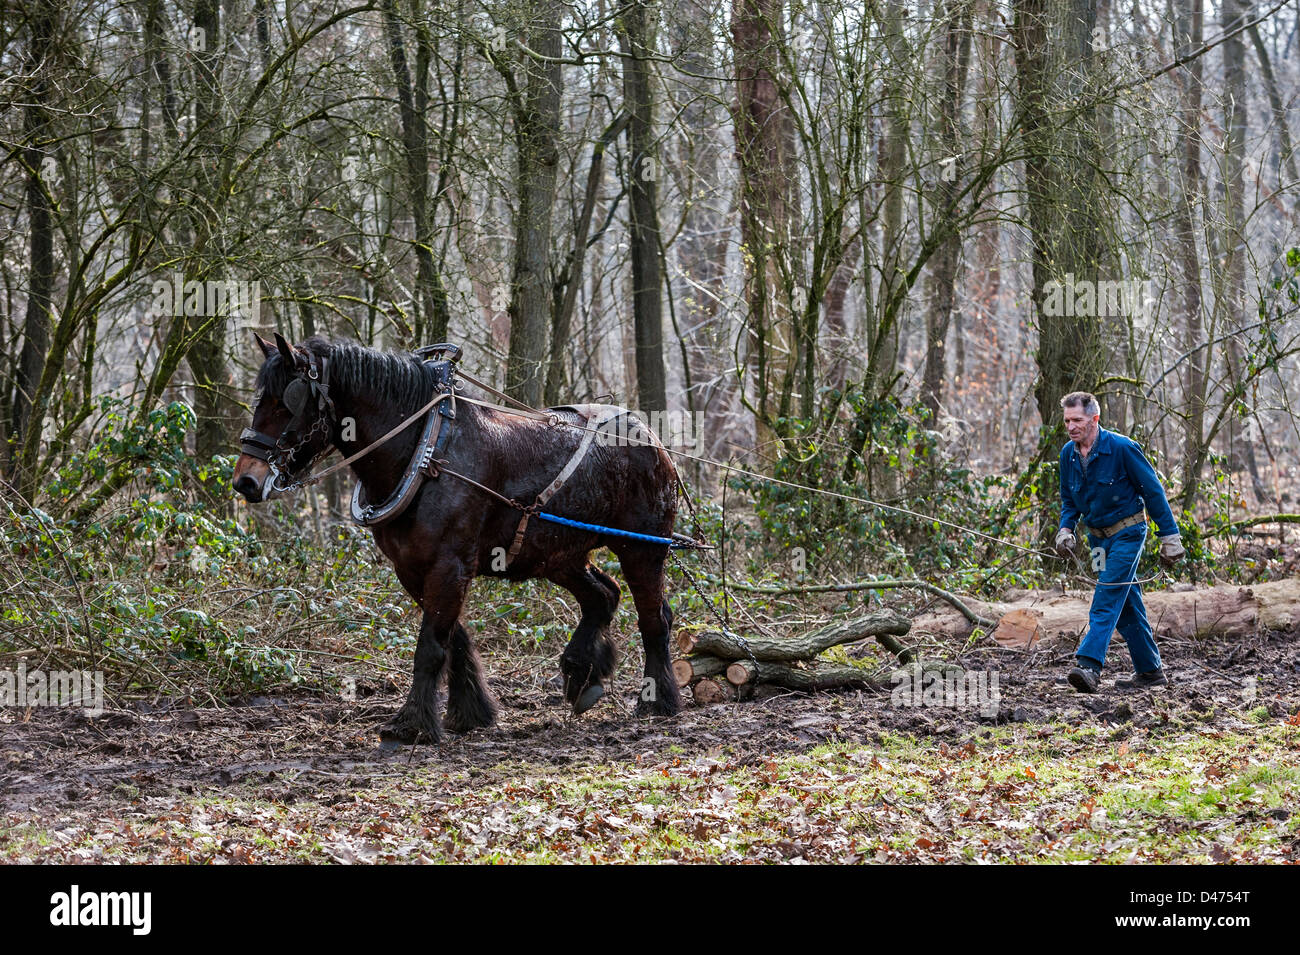 Ziehen von Baumstämmen Förster / Protokolle aus Wald mit belgischen Zugpferd / Brabant schweren Pferd (Equus Caballus), Belgien Stockfoto